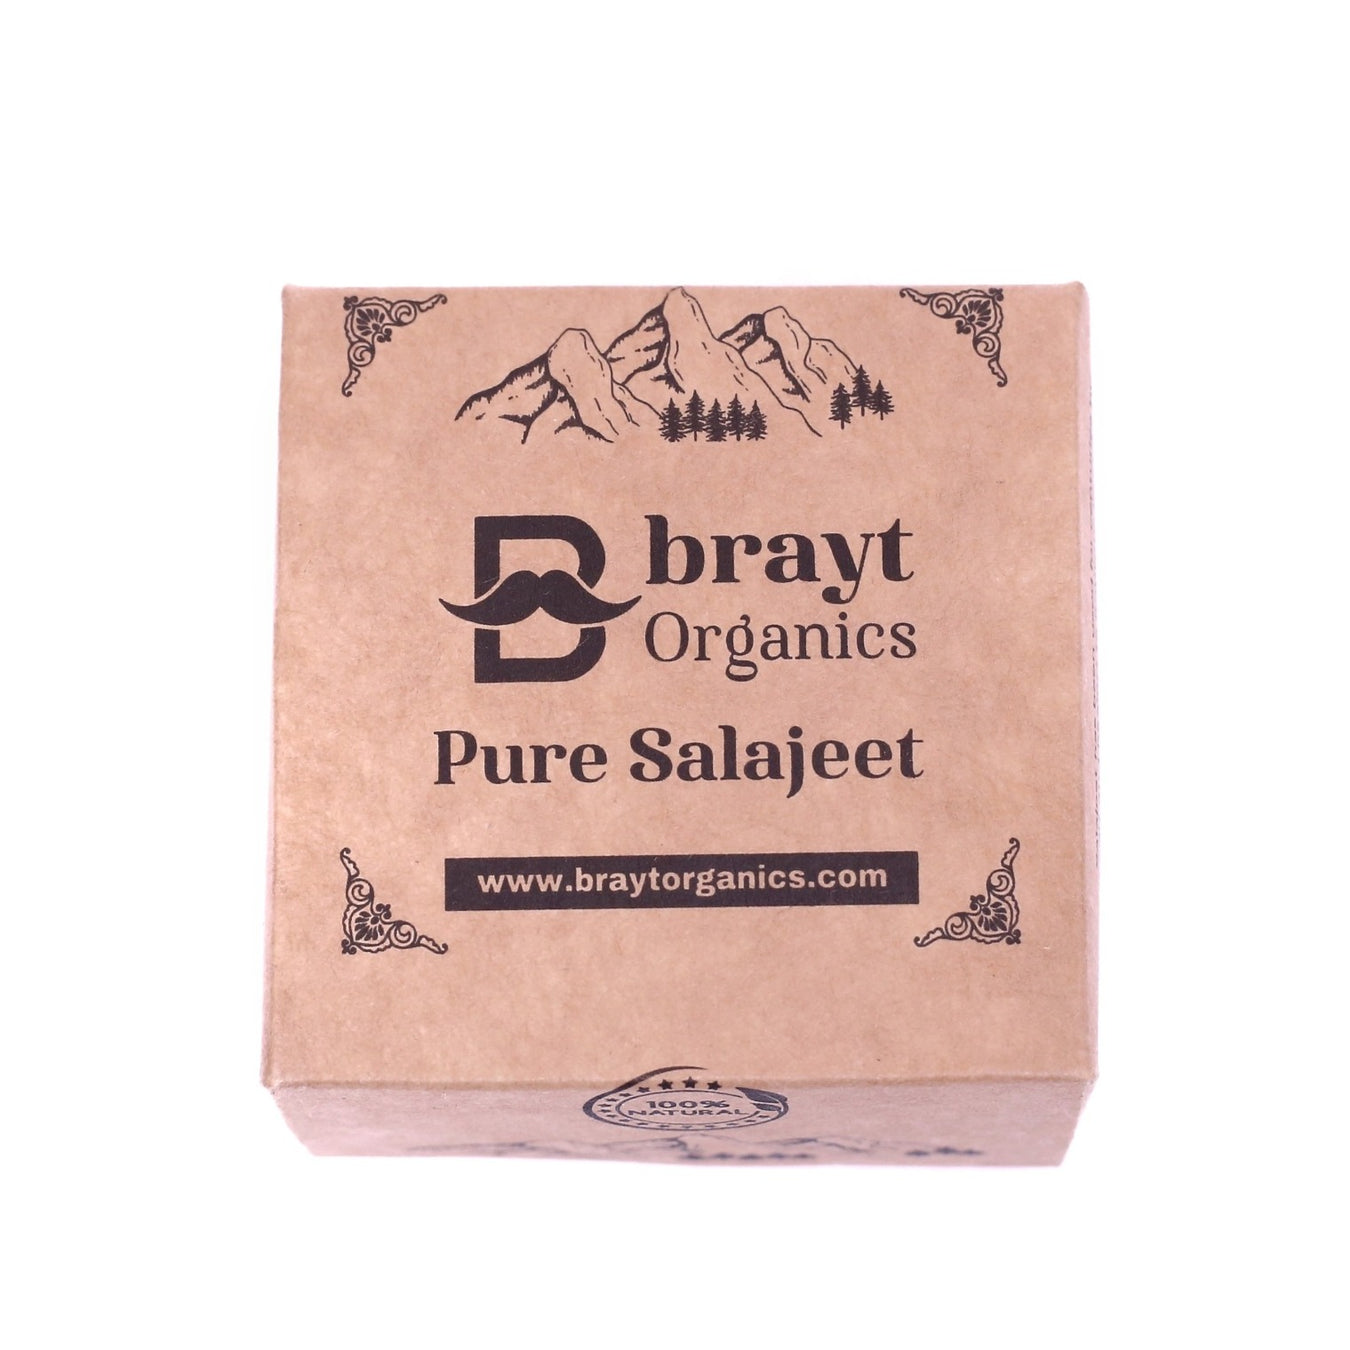 Brayt Organics